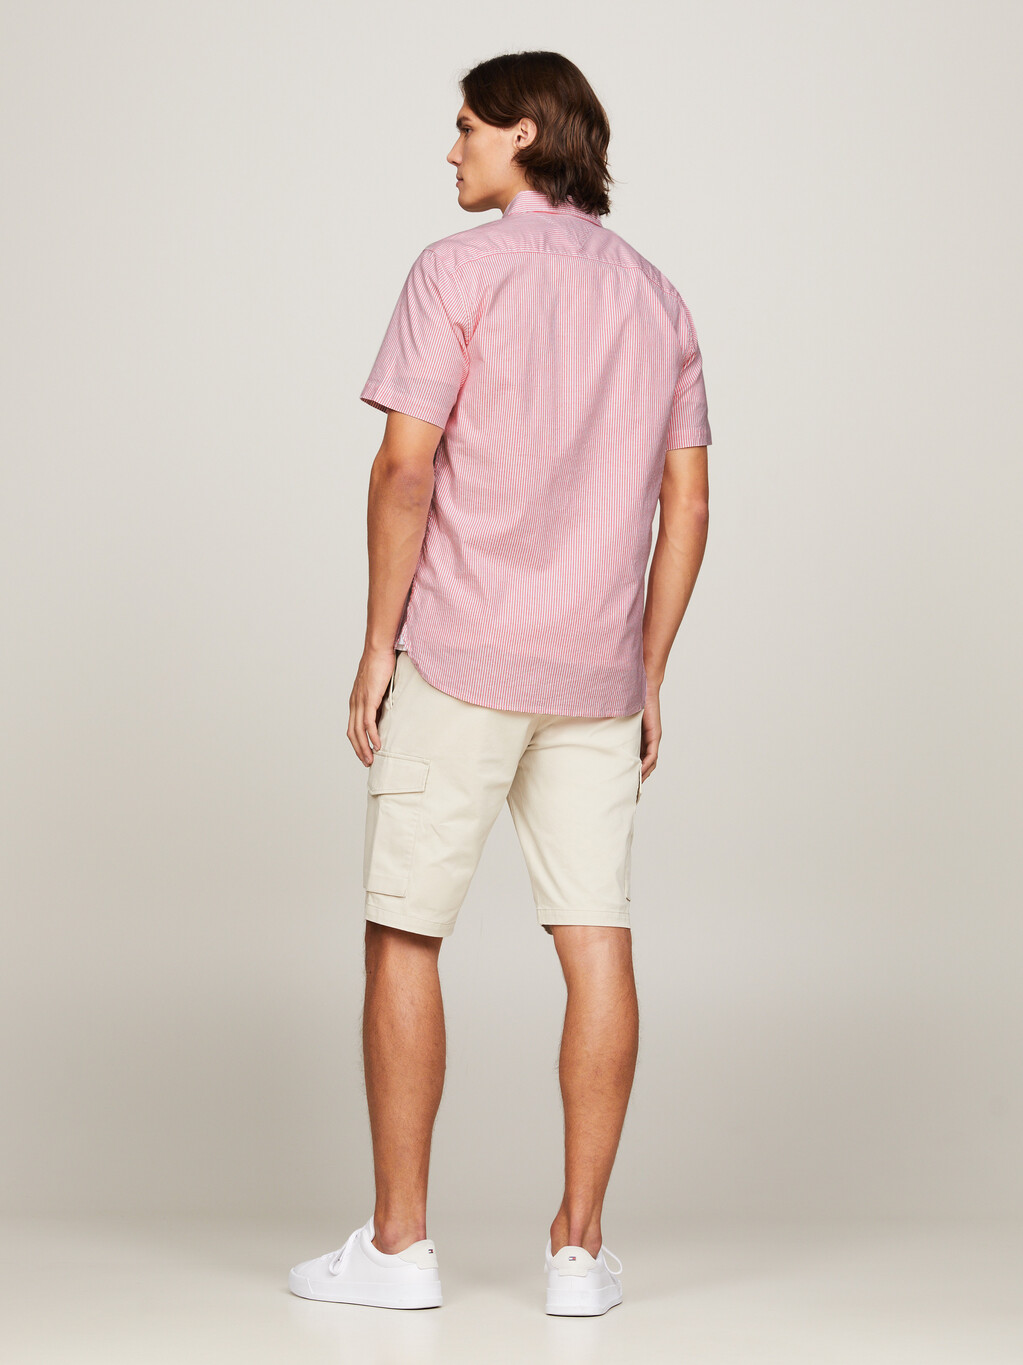 Flag Stripe Short Sleeve Shirt, Laser Pink / Optic White, hi-res